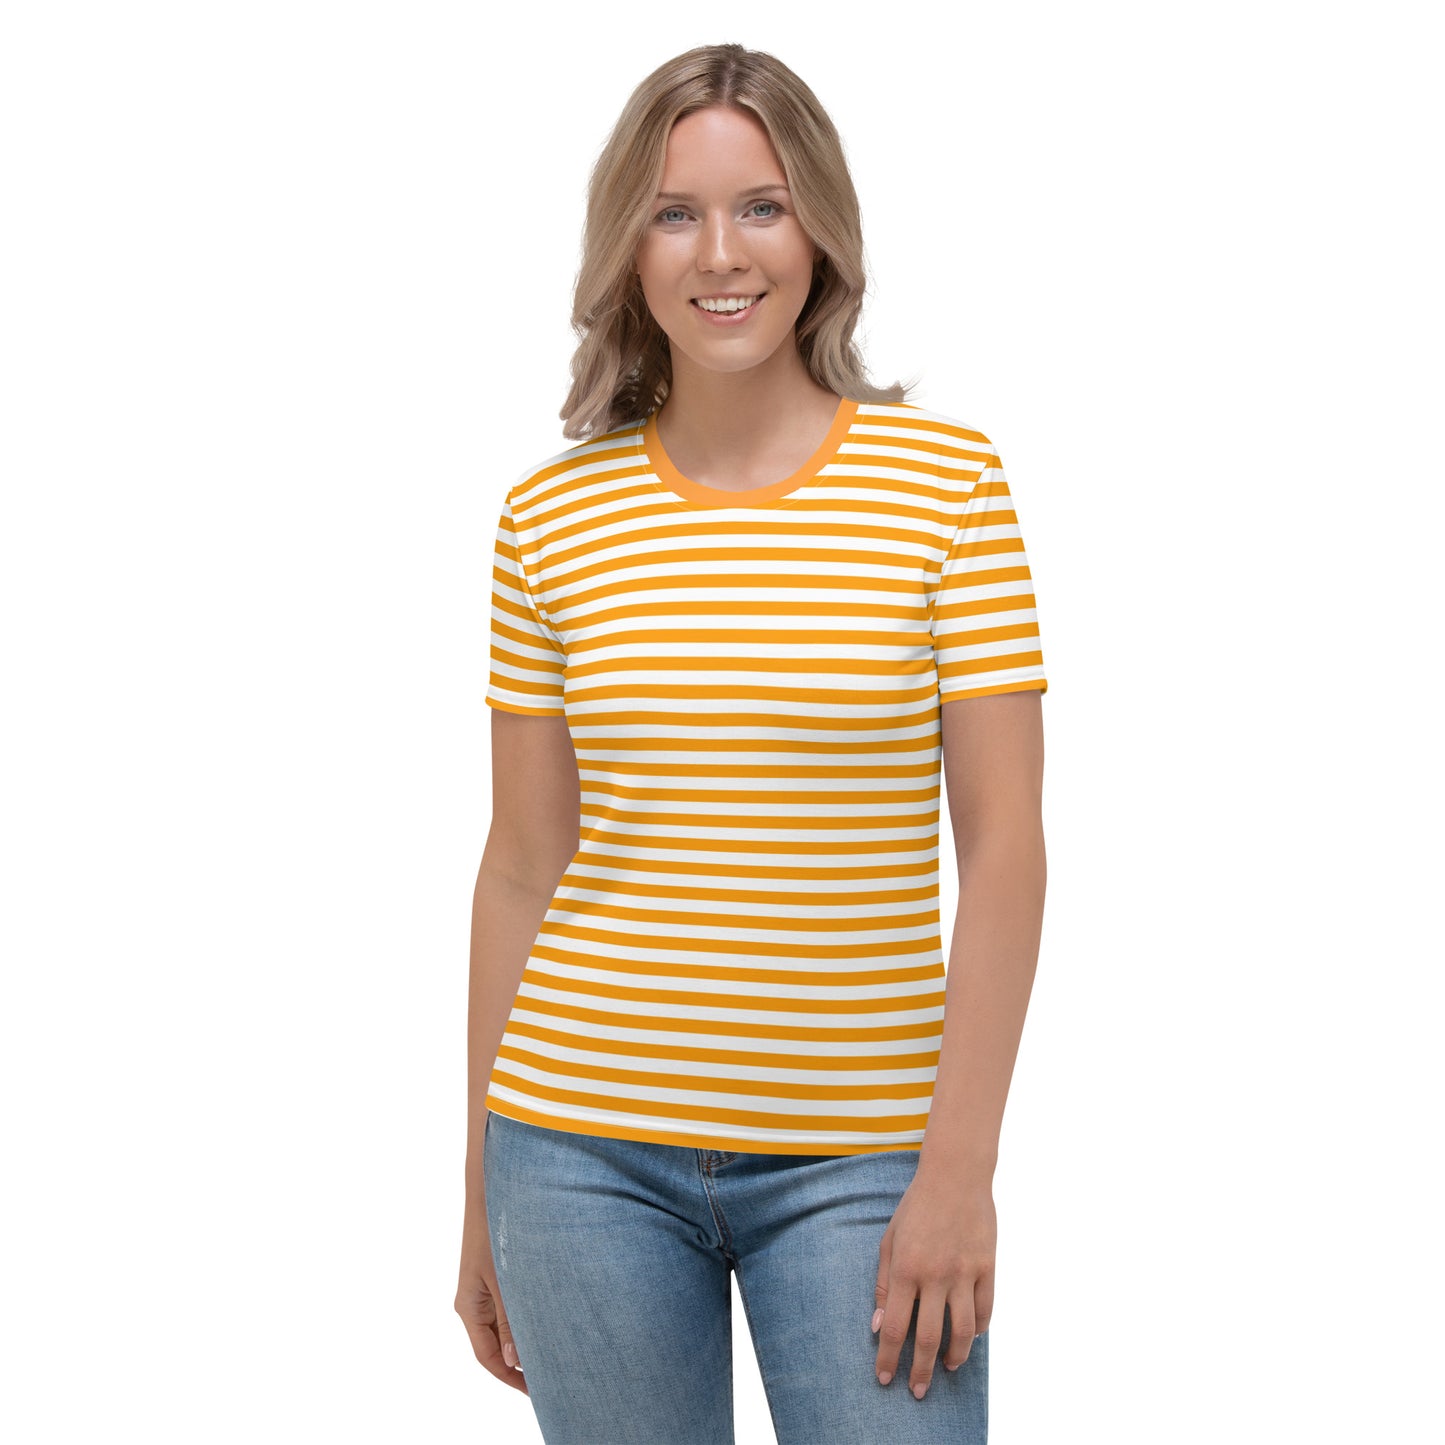 Orange And White Striped Women's T-shirt